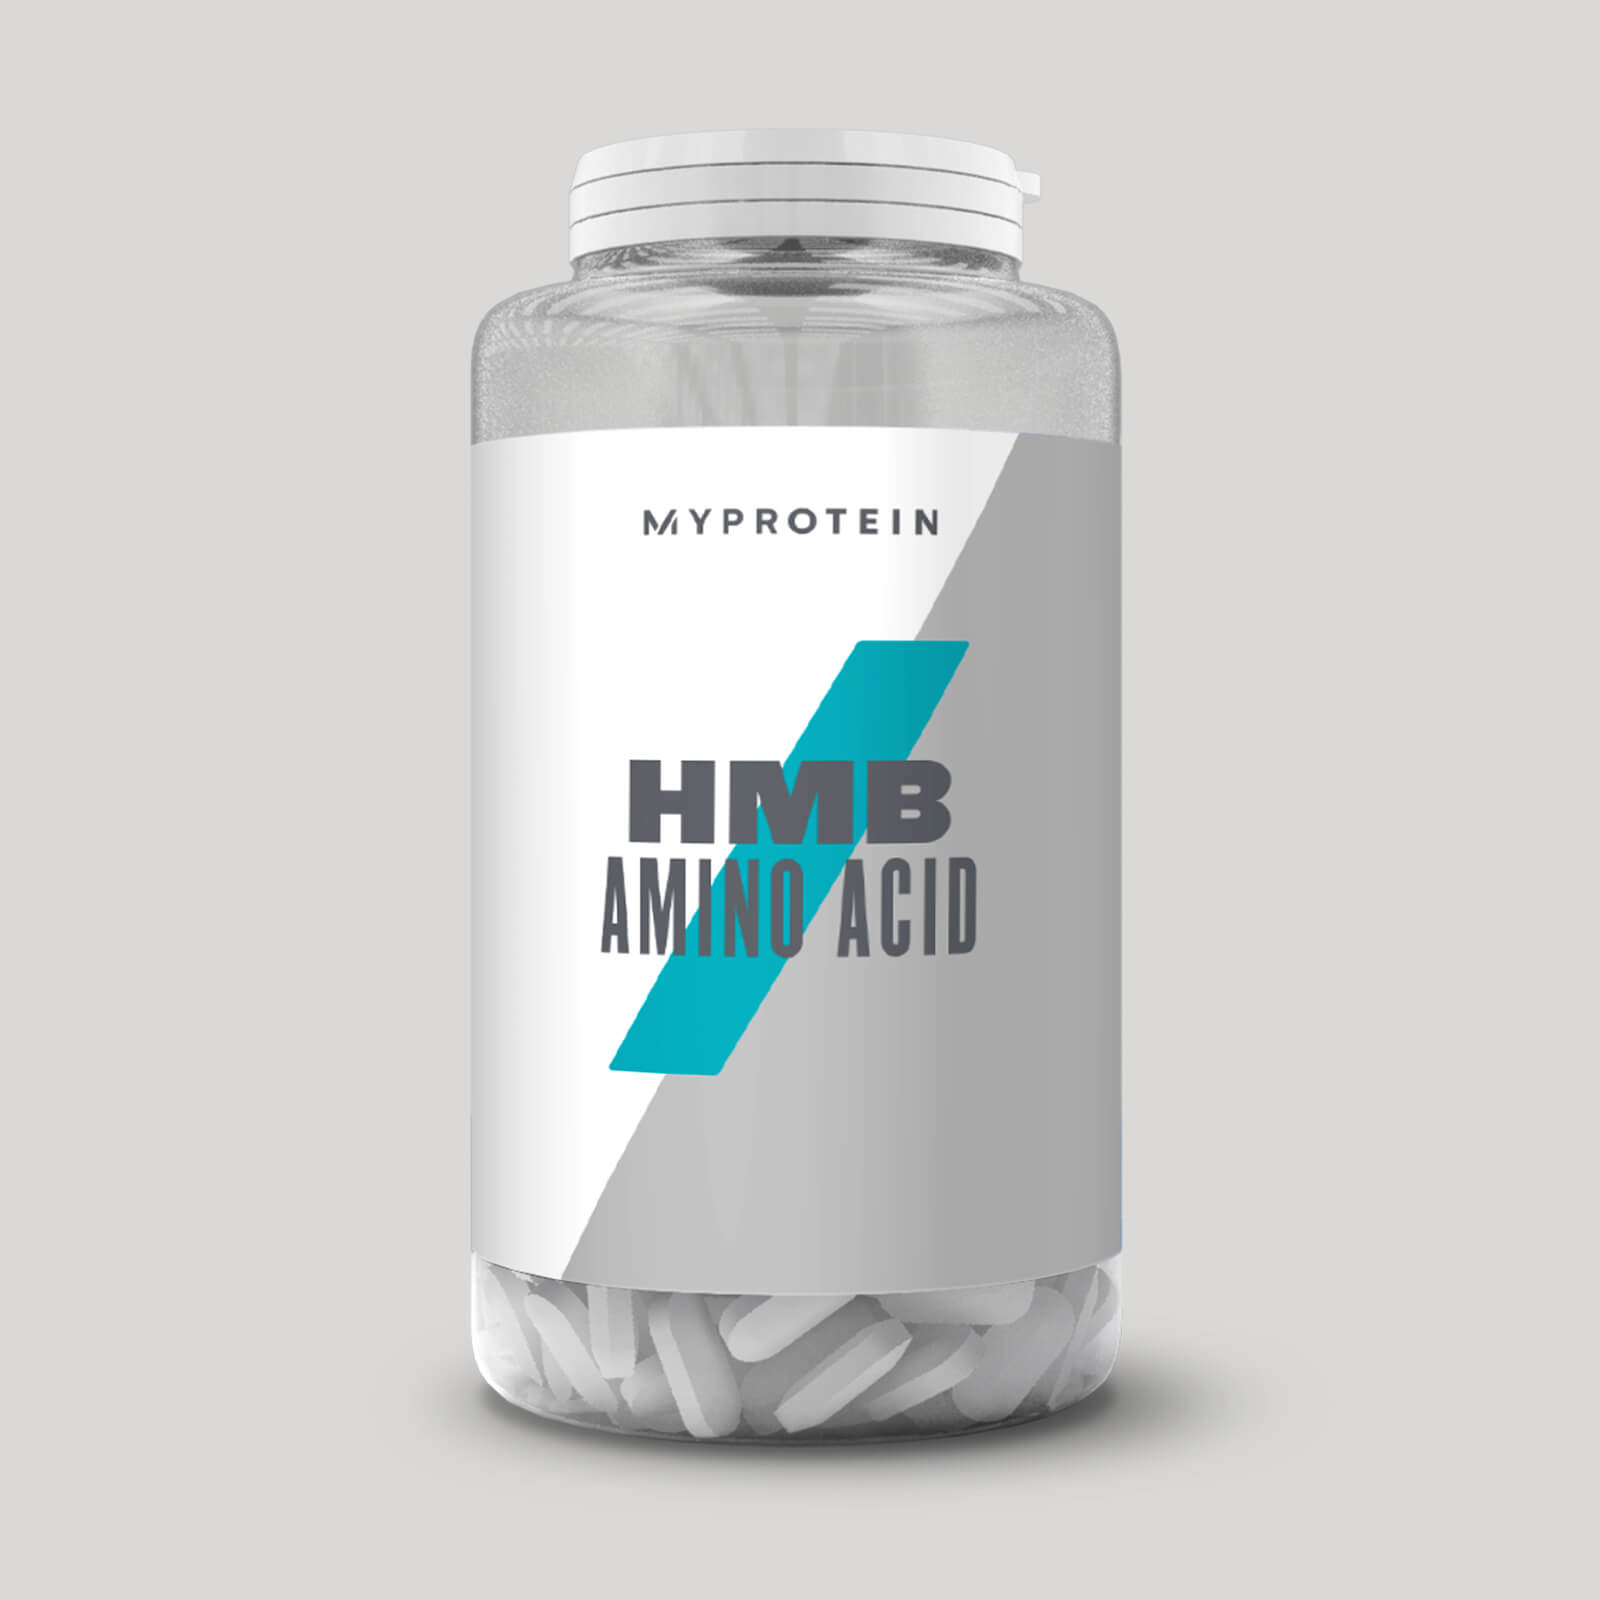 Myprotein HMB Tabletten - 180tabletten - Naturel